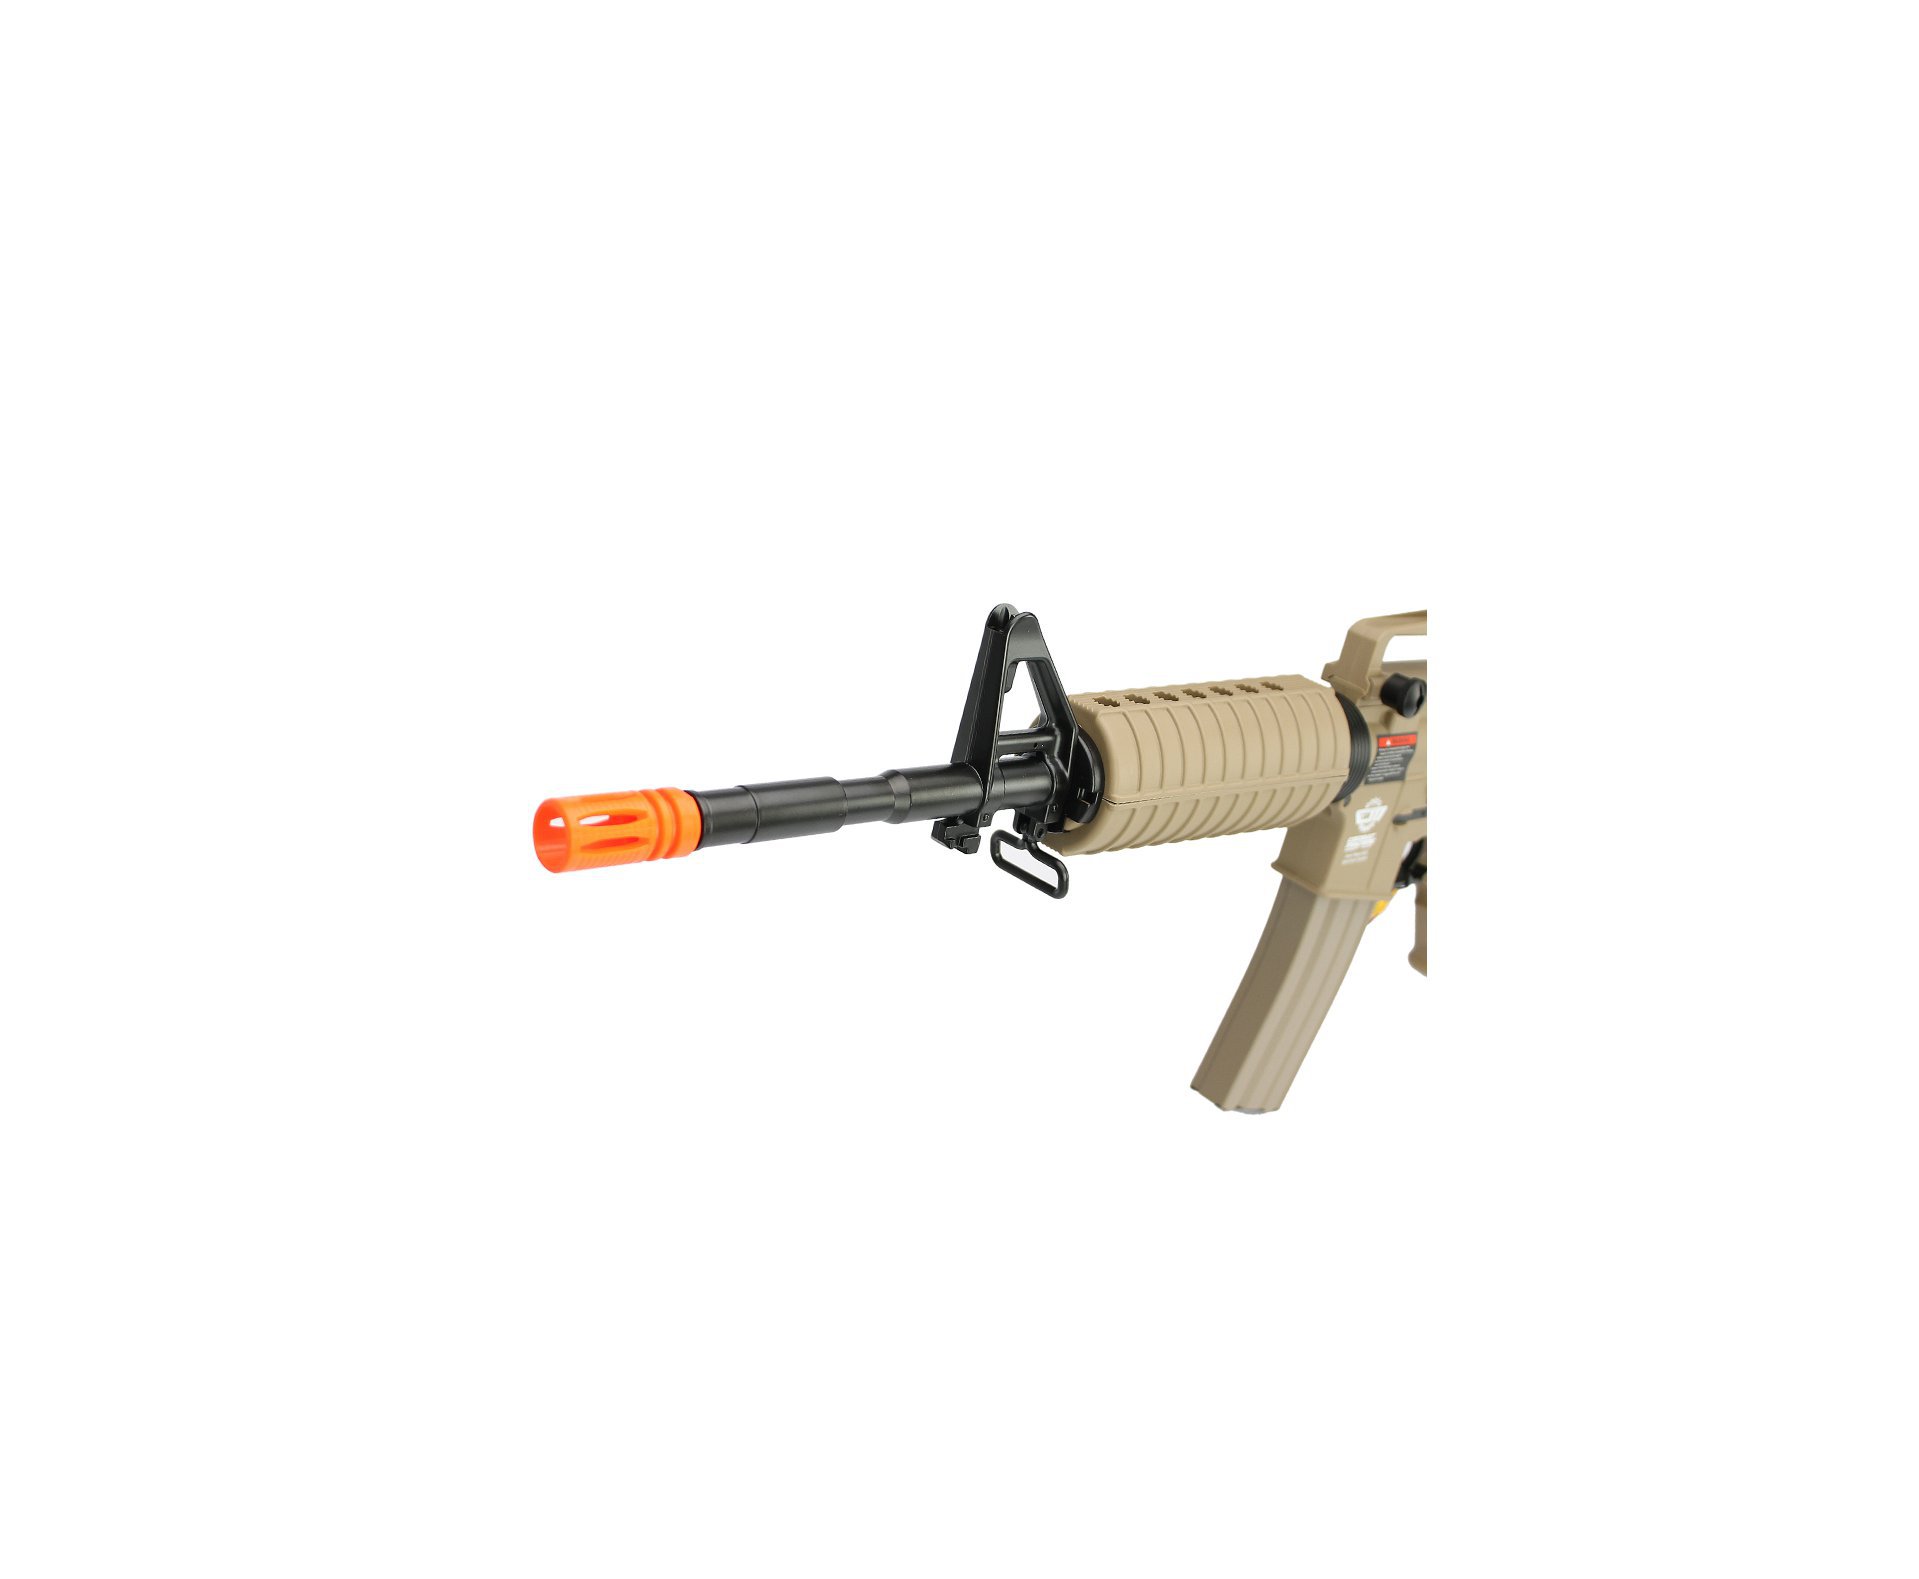 Rifle De Airsoft Cm16 Carbine Modo Dst Tan Cal 6,0mm - G&g